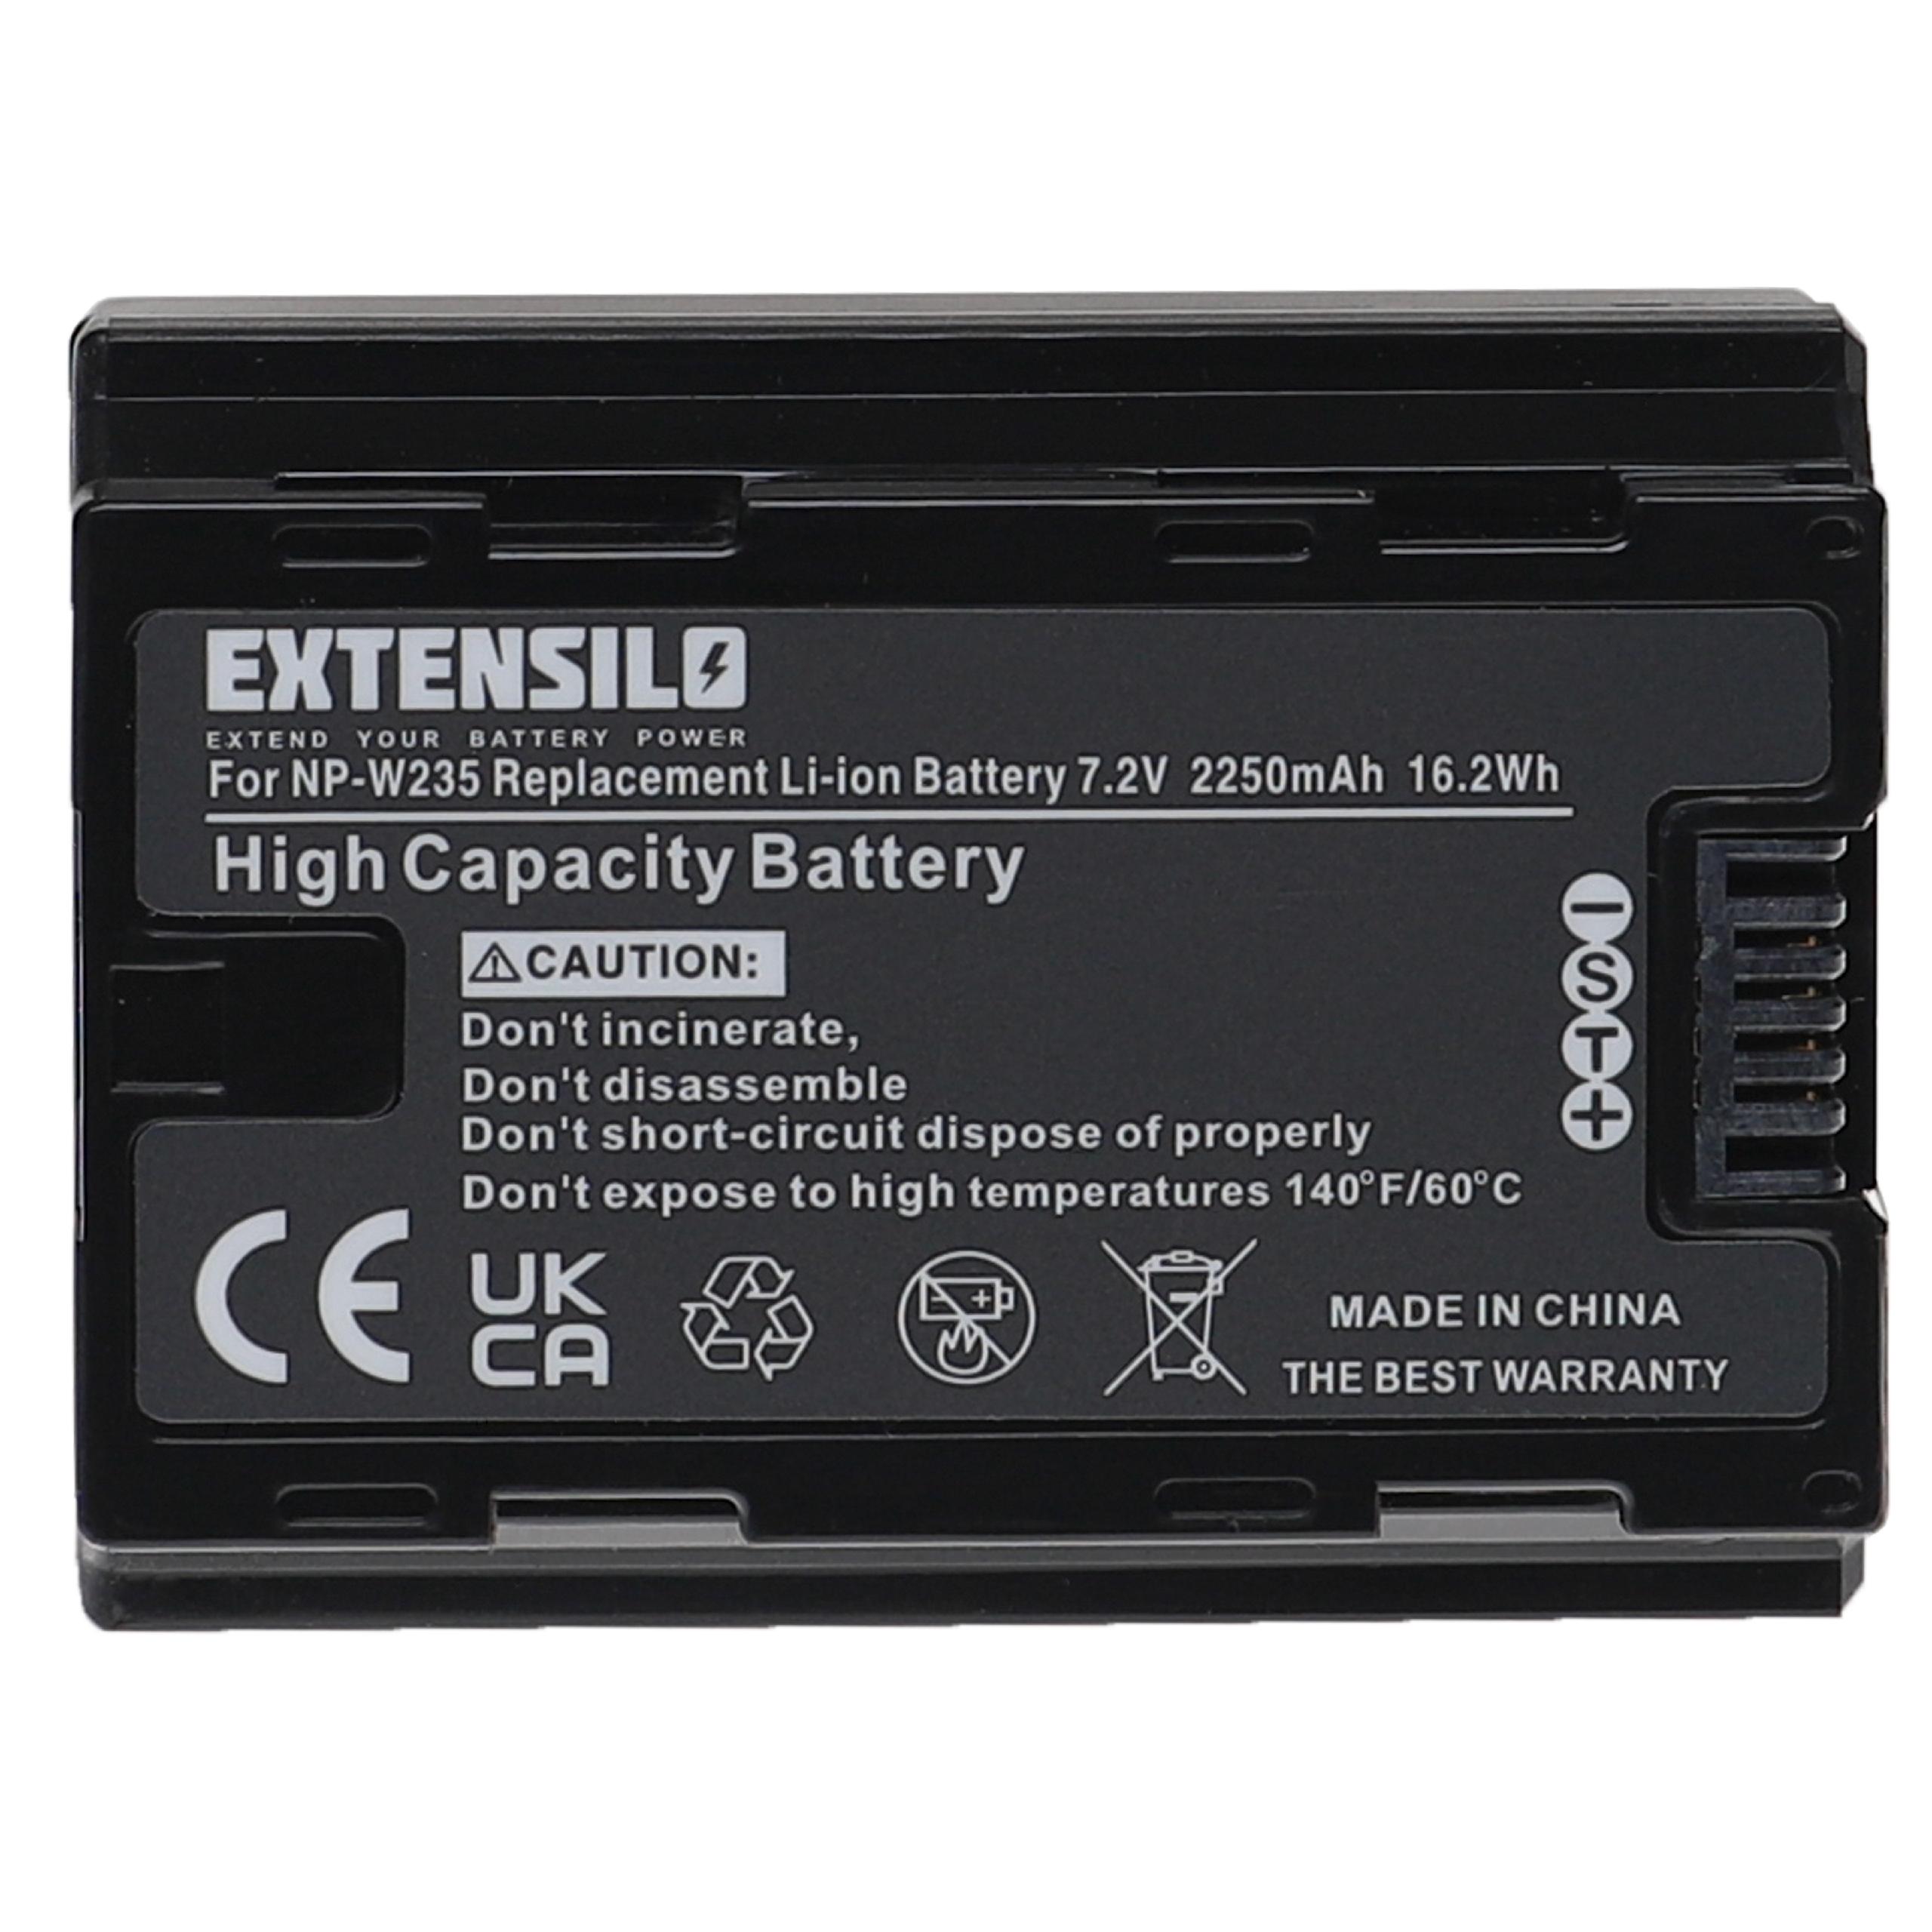 Batterie remplace Fuji / Fujifilm NP-W235 pour appareil photo - 2250mAh 7,2V Li-ion